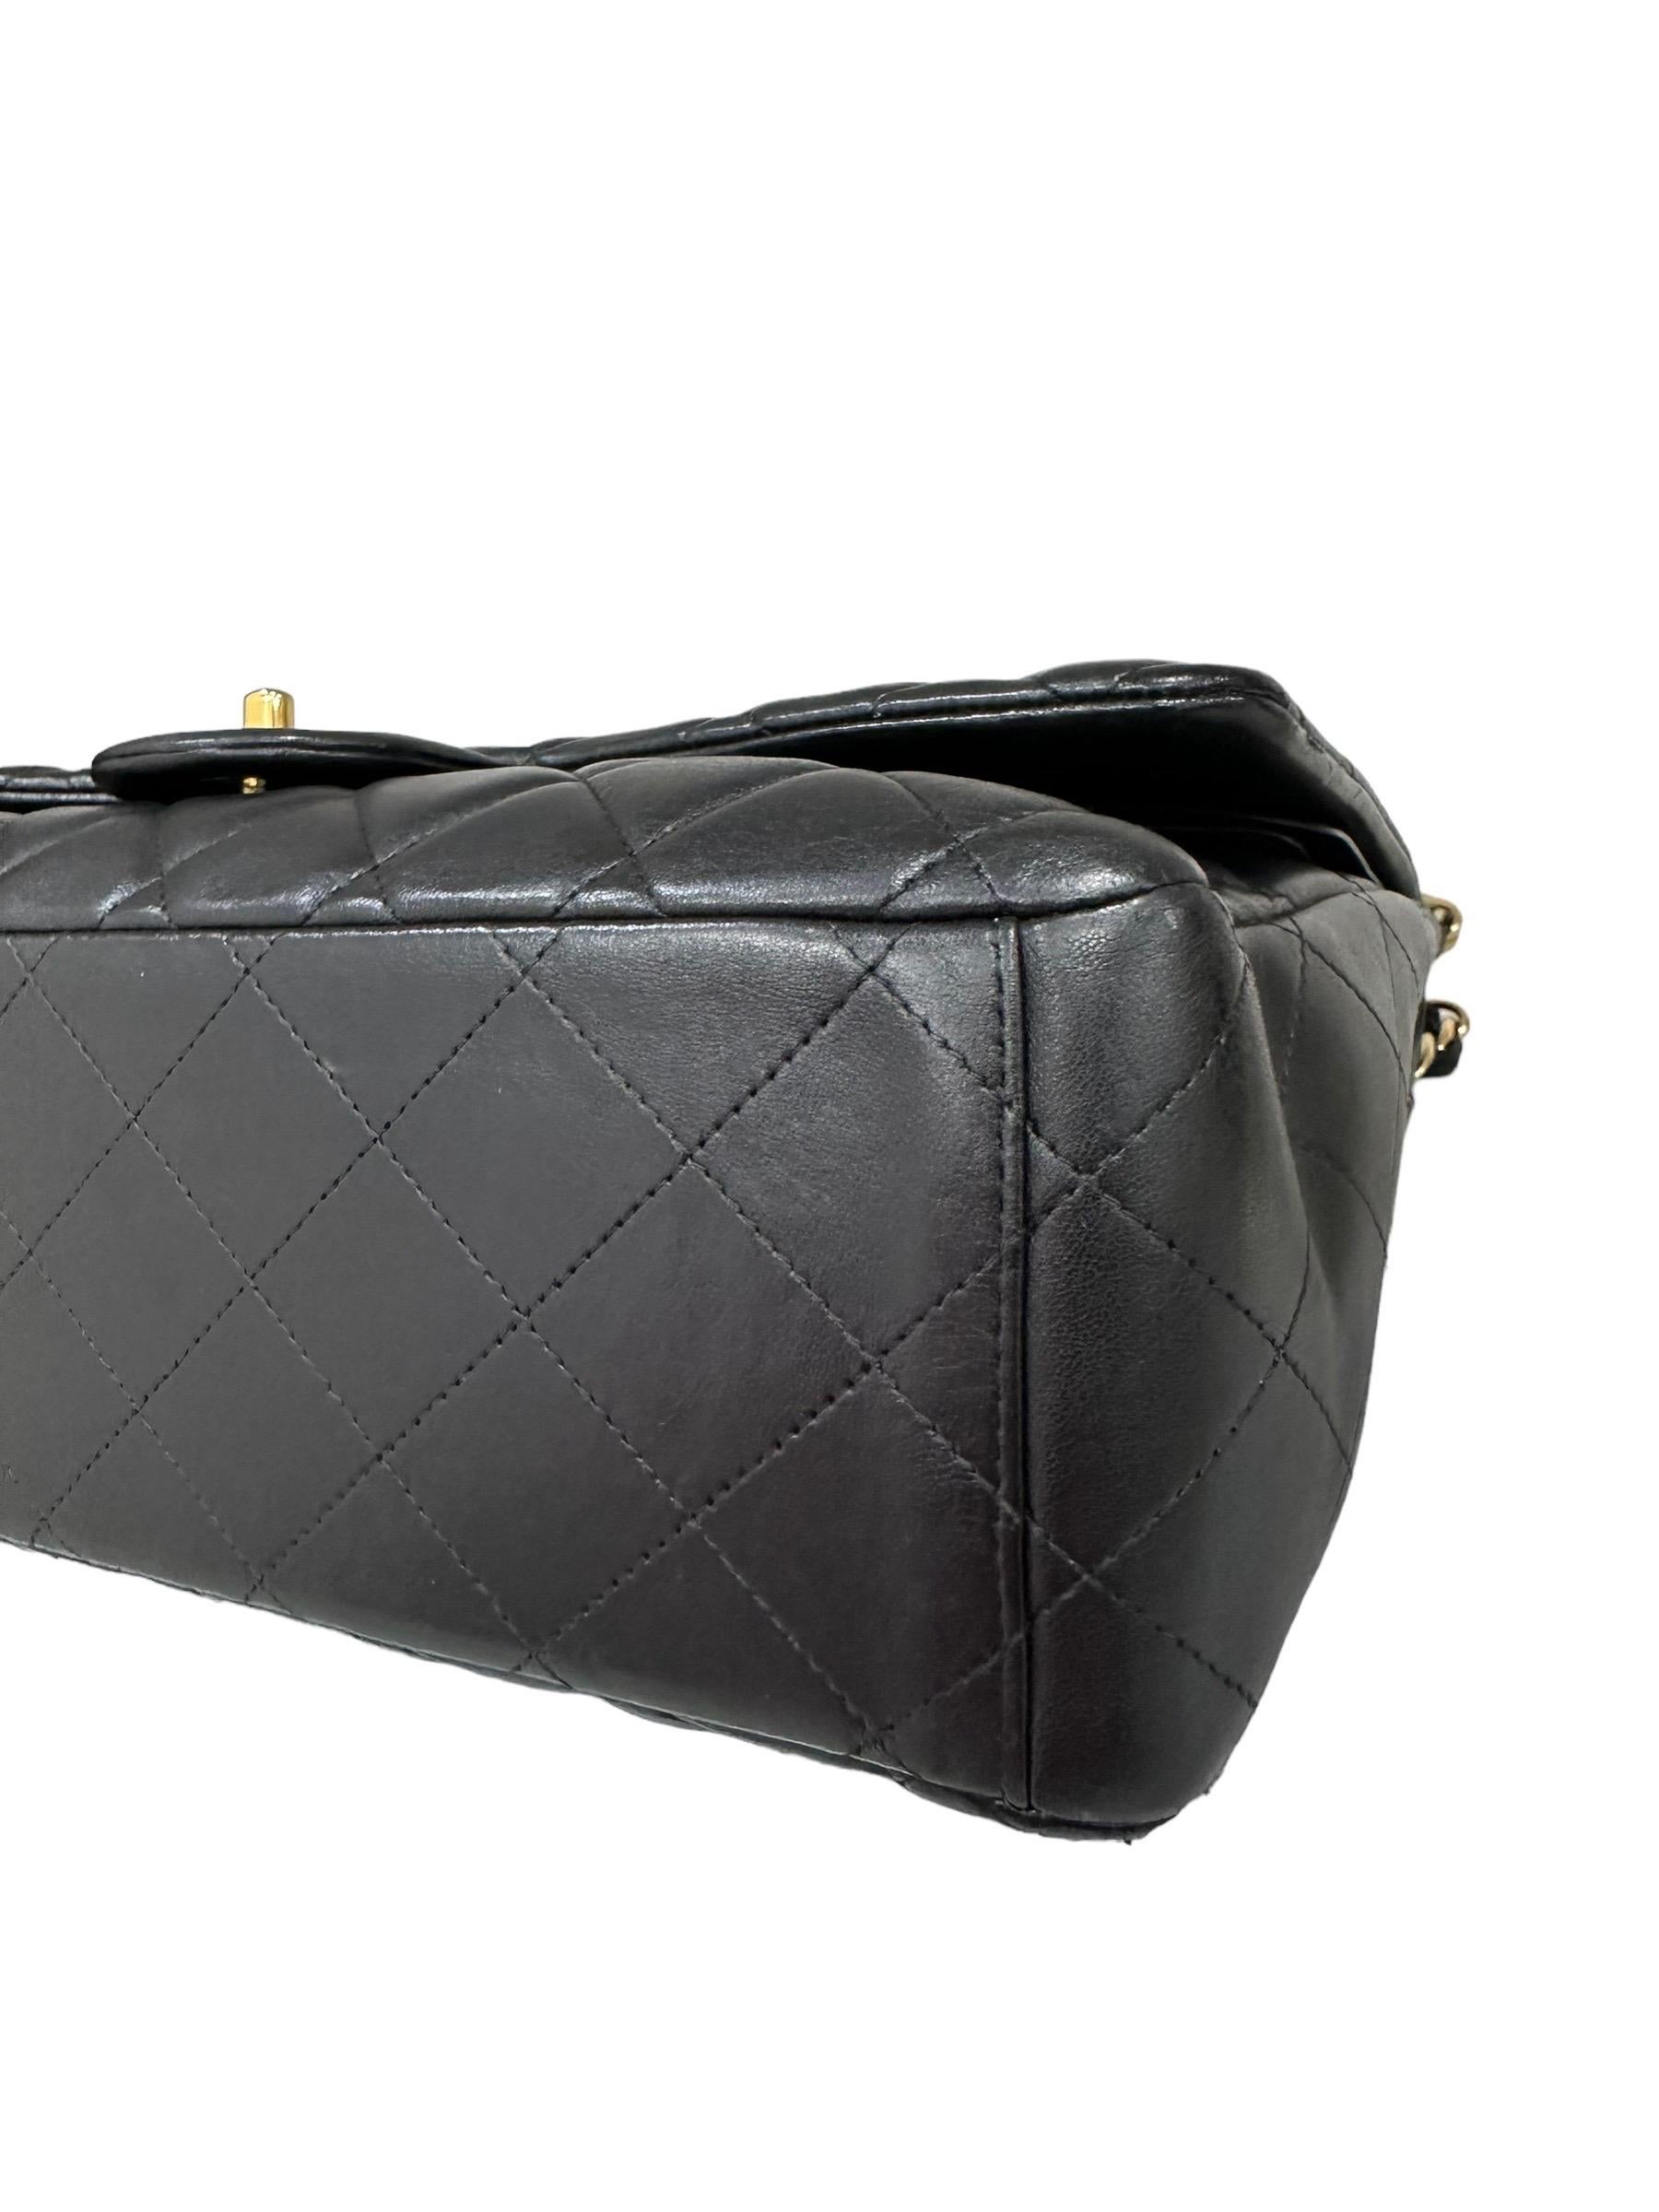 2011 Chanel Timeless Maxi Jumbo Black Leather Top Shoulder Bag For Sale 7